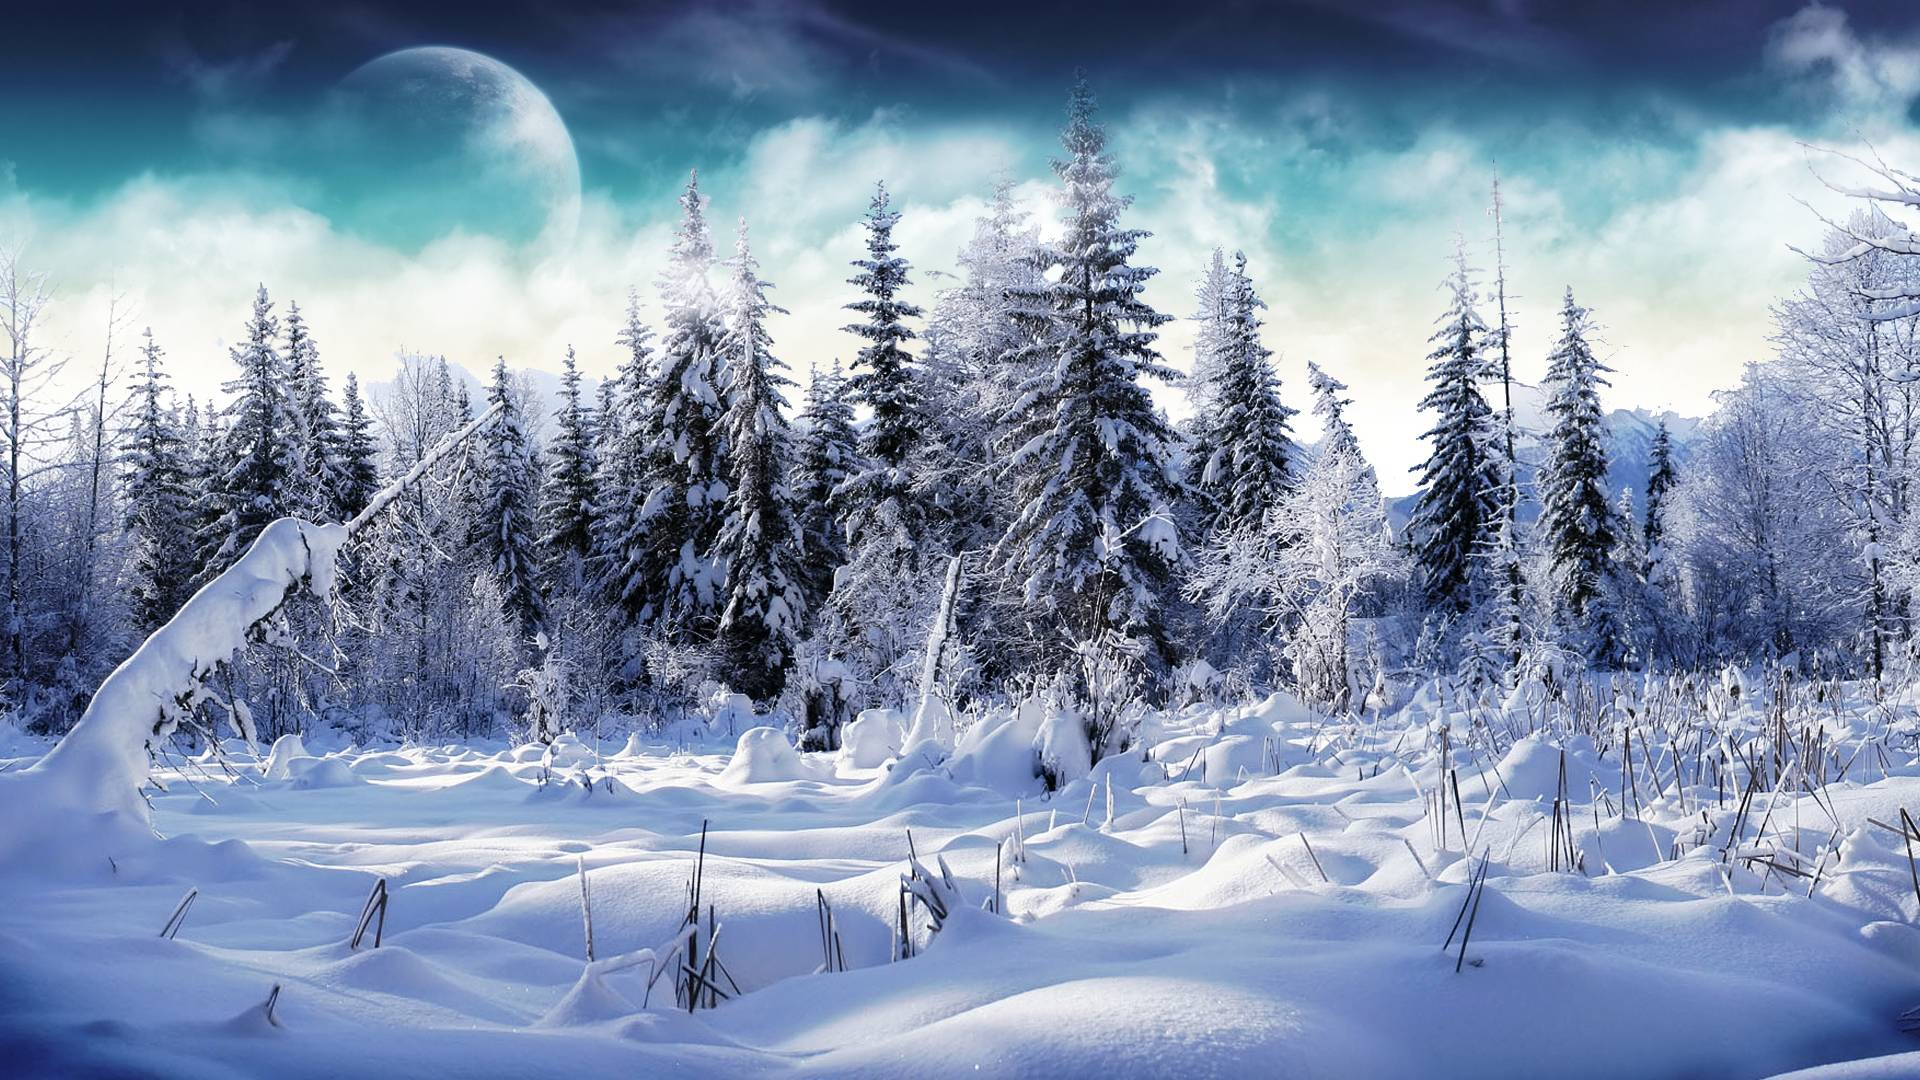 Winter wonderland 2 desktop PC and Mac wallpaper